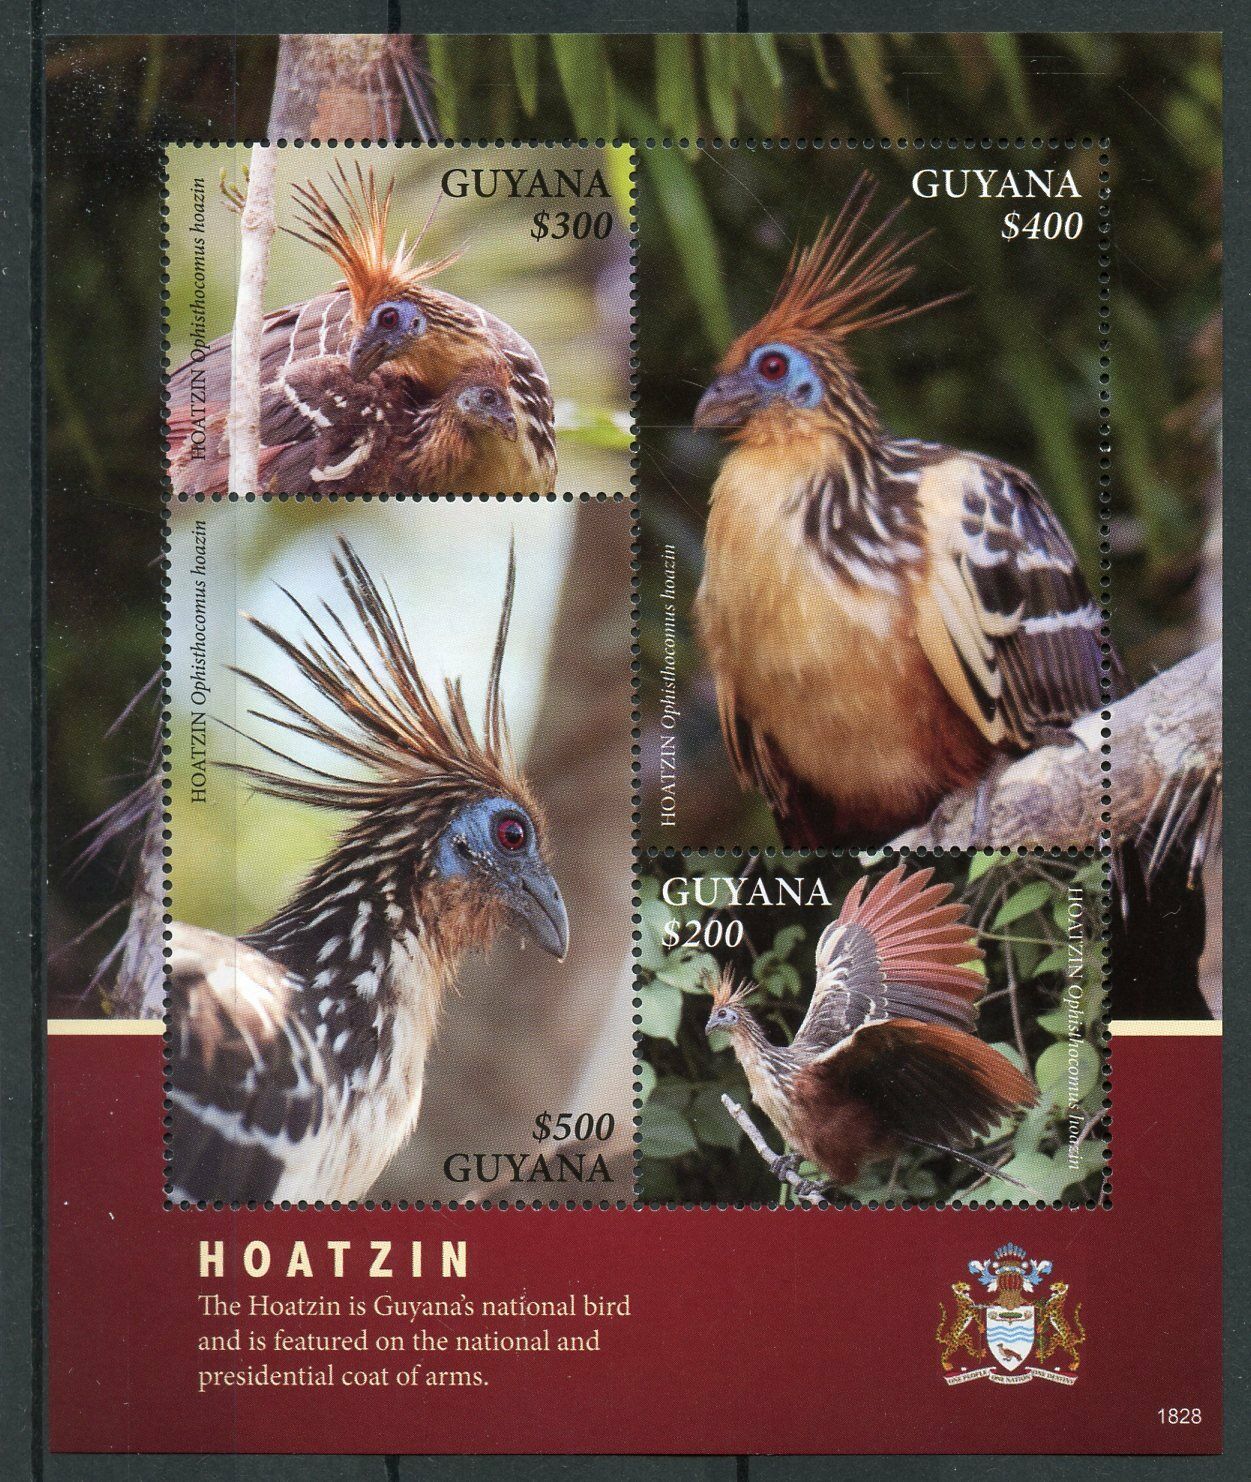 Guyana 2018 MNH Birds on Stamps Hoatzin National Bird of Guyana Coat of Arms 4v M/S